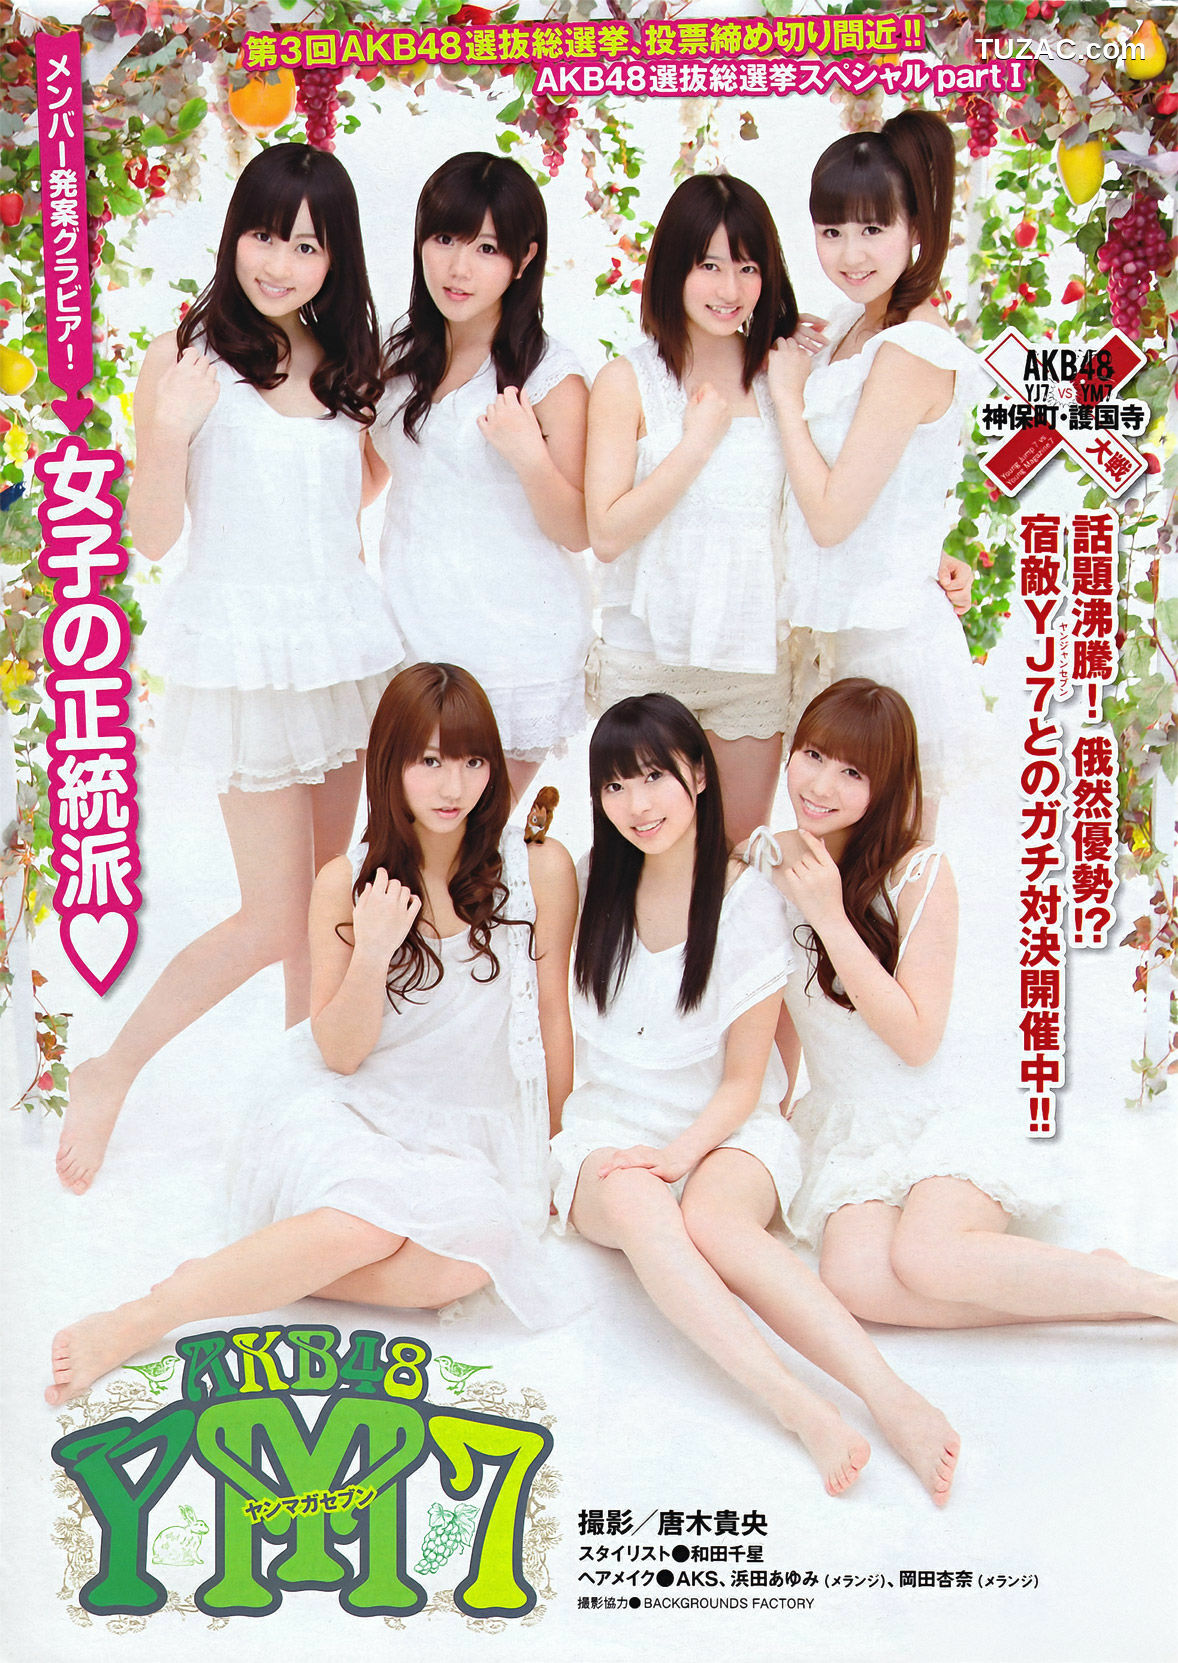 Young Magazine杂志写真_ YM7 松井珠理奈 NMB48 2011年No.27 写真杂志[14P]